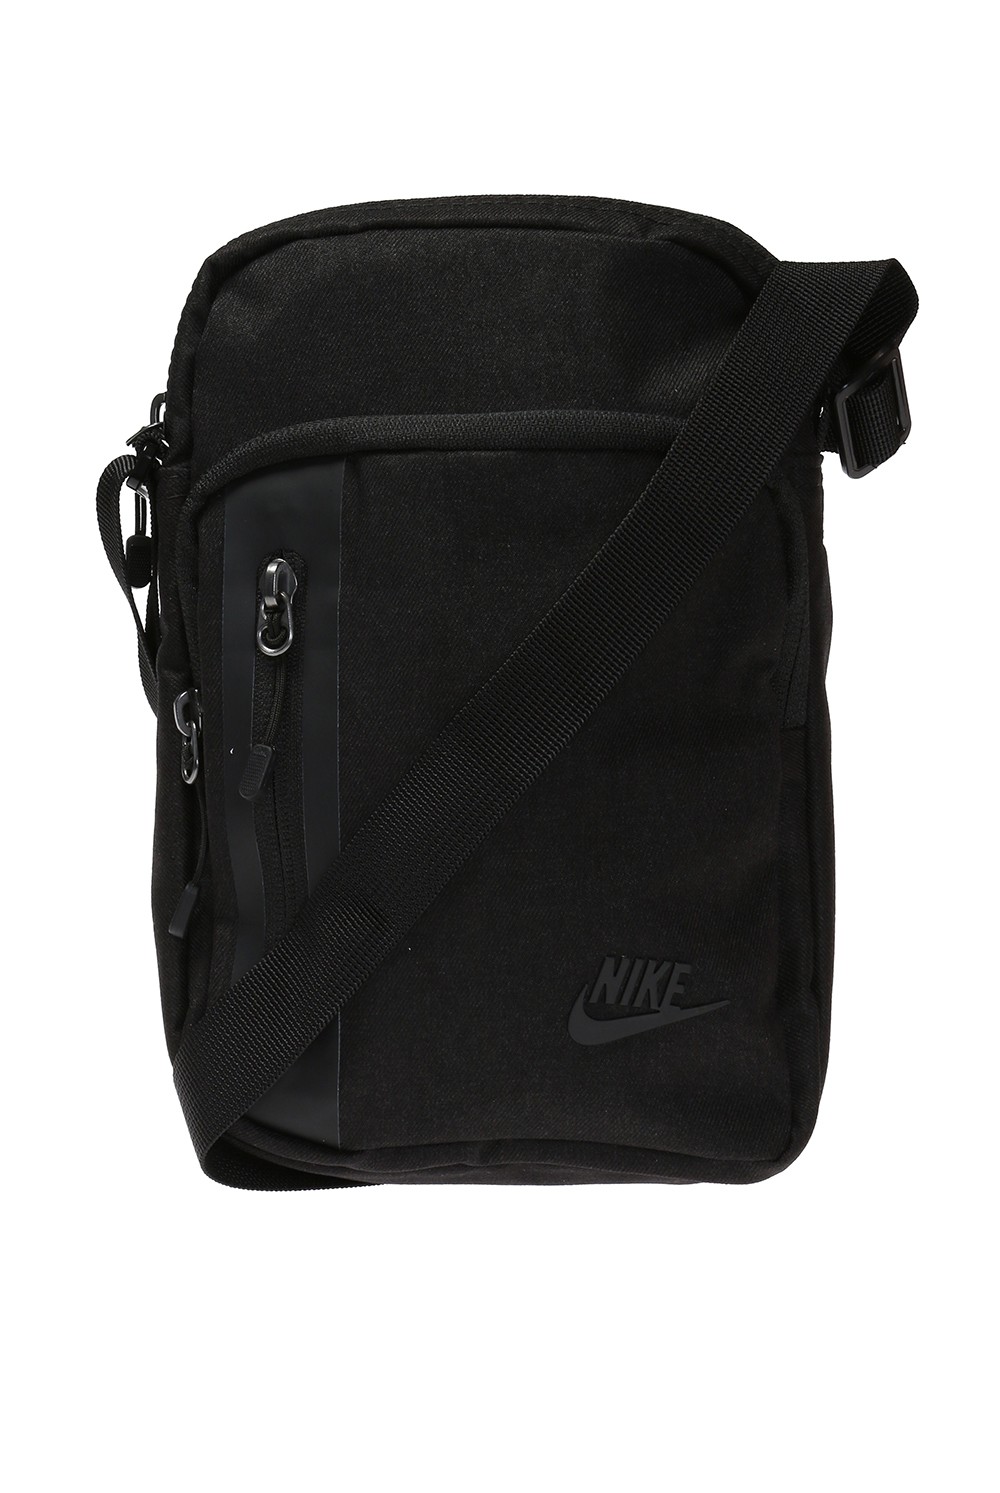 Nike Shoulder bag with logo | Men's Bags | Vitkac